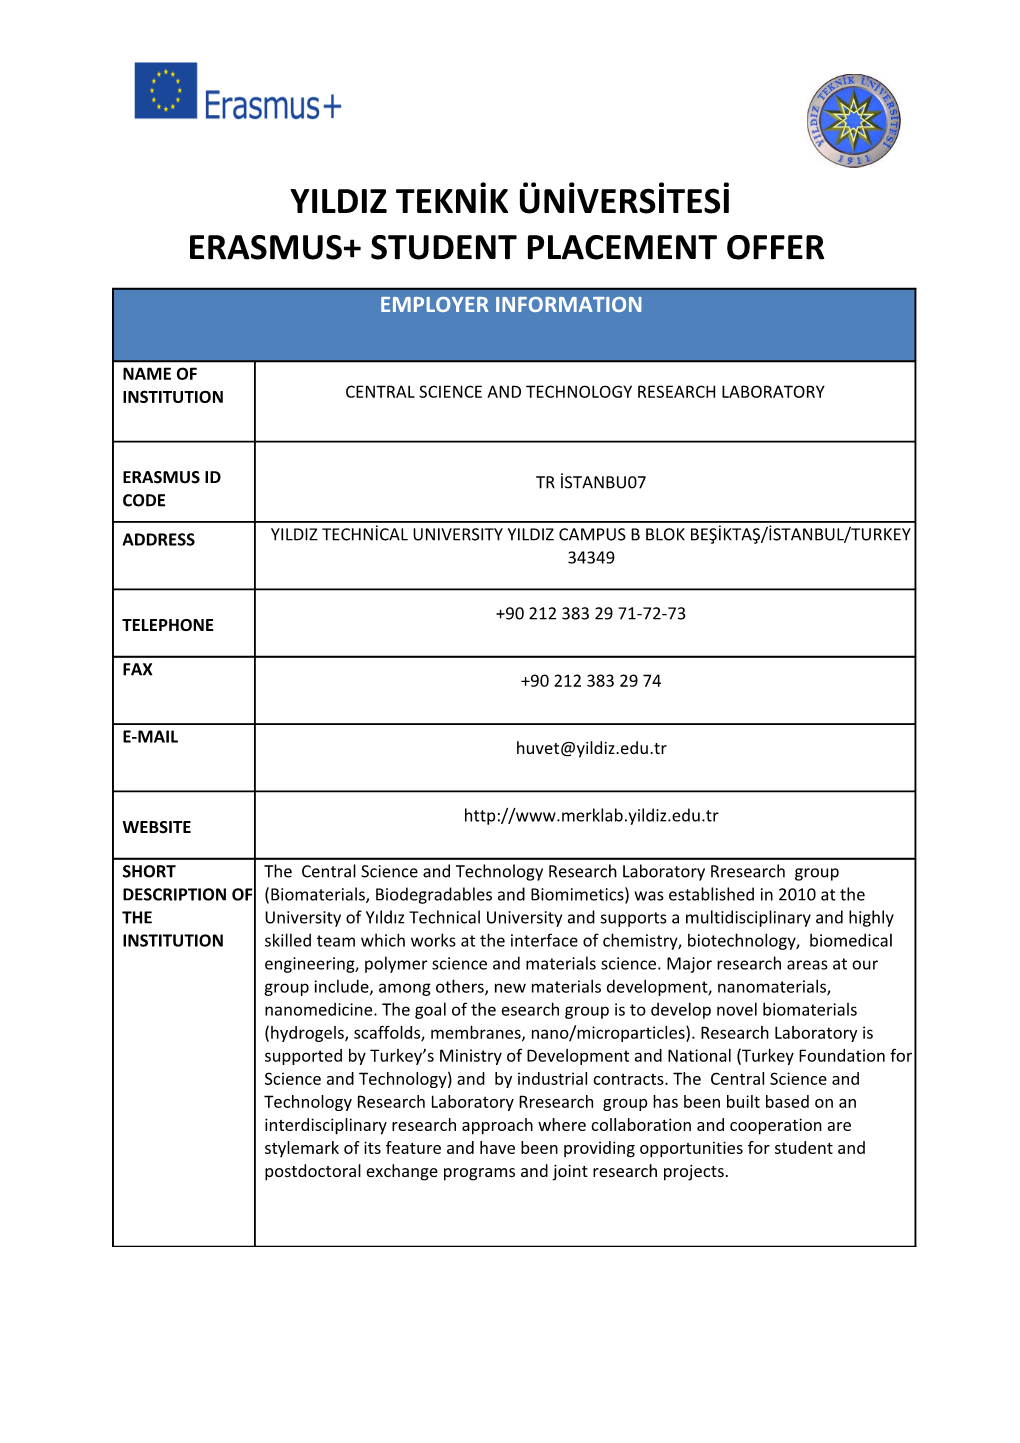 Erasmus+ Student Placement Offer